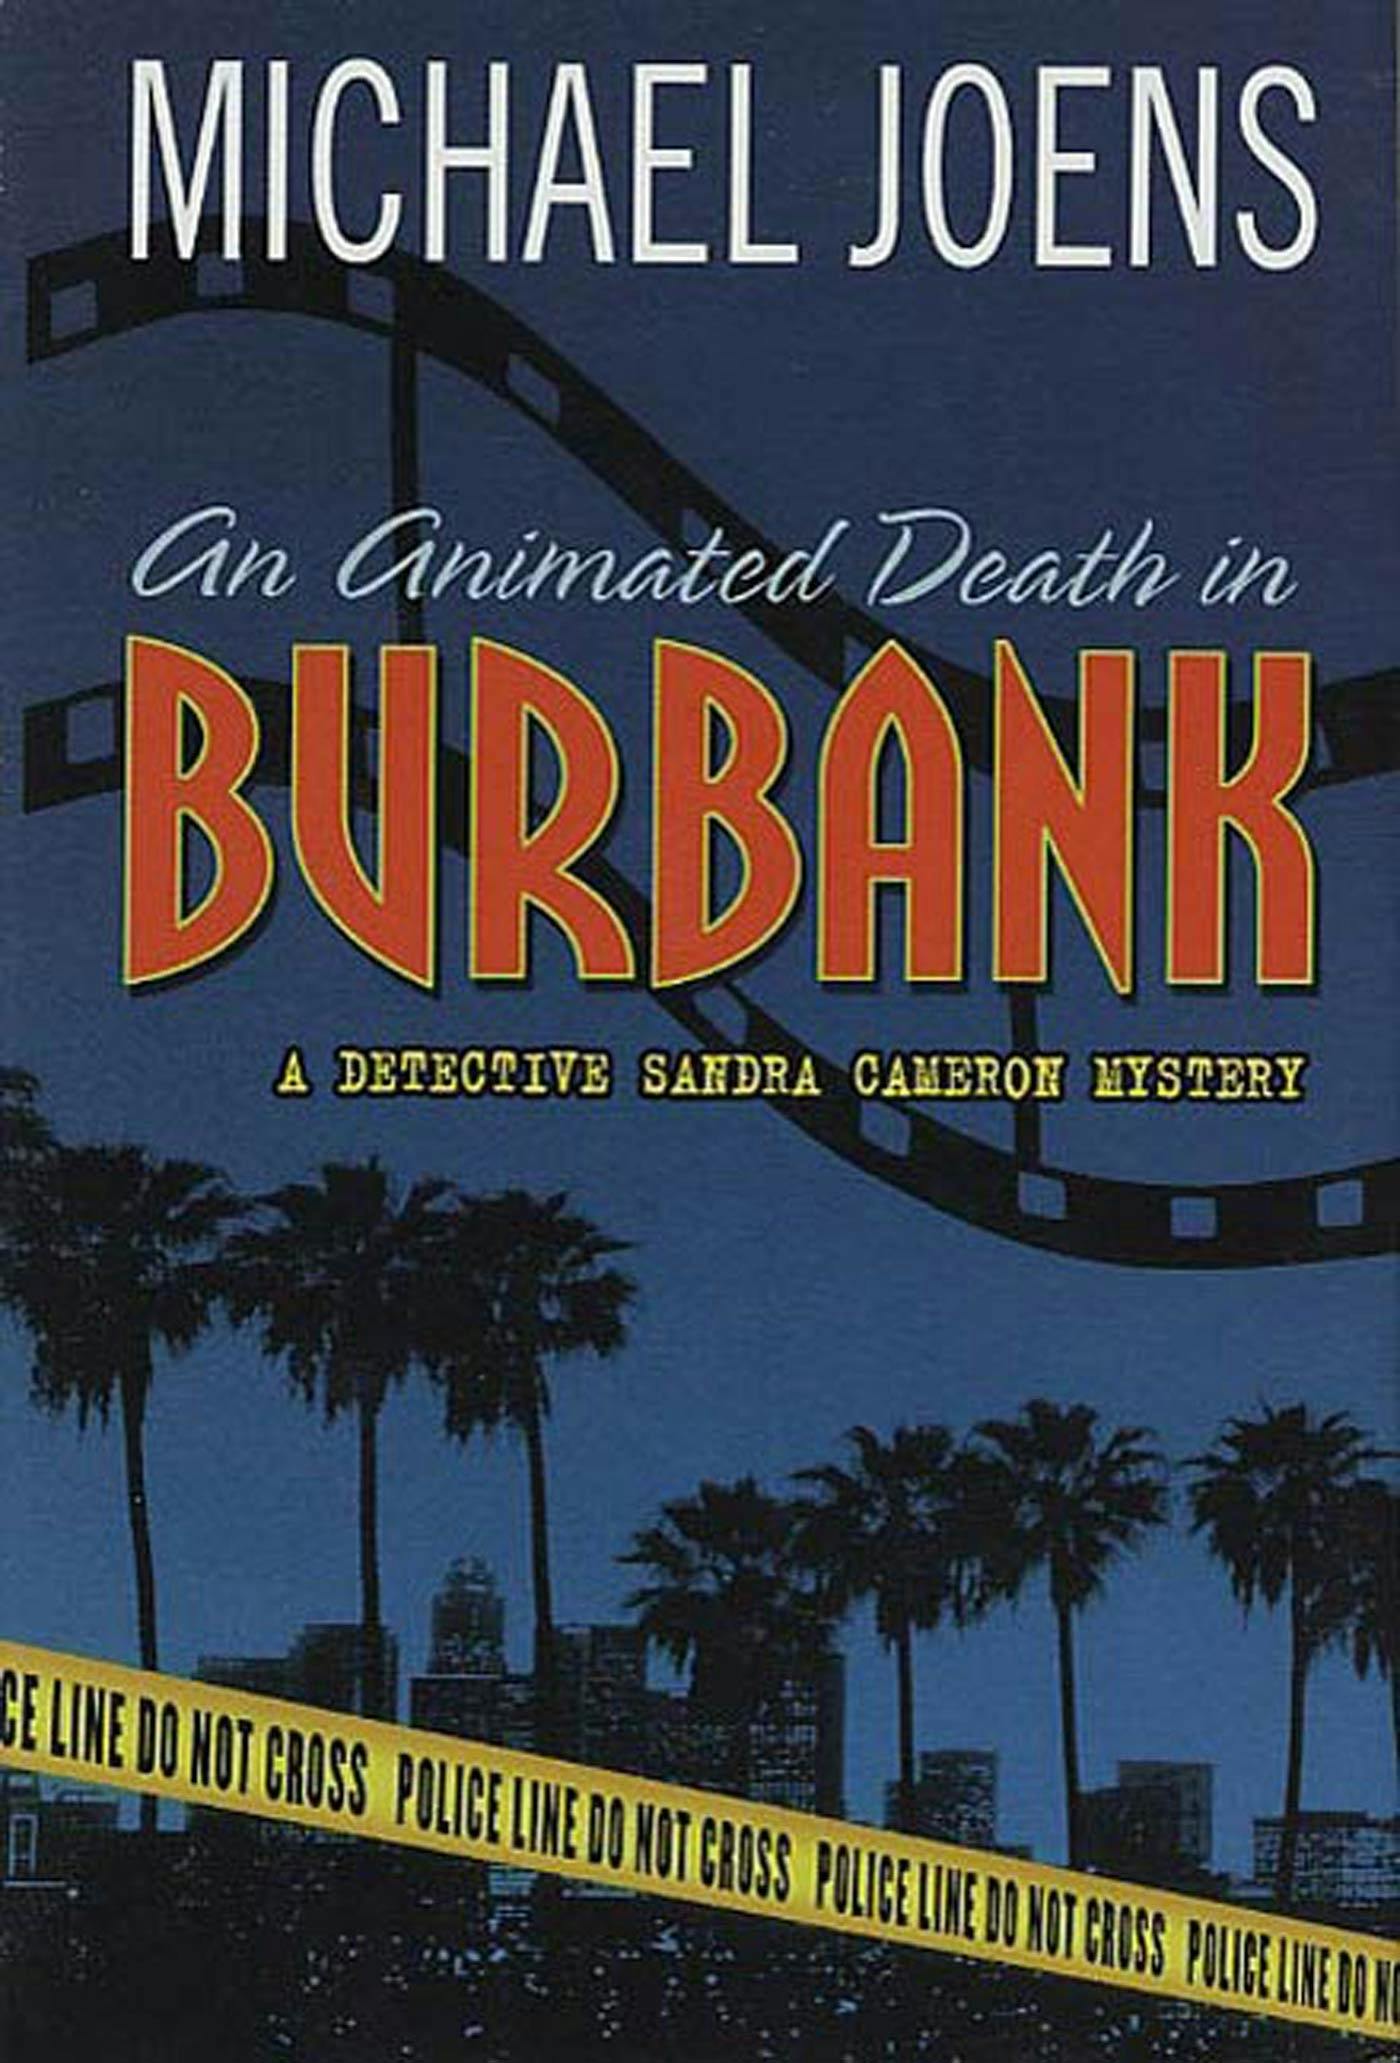 Animated Death In Burbank